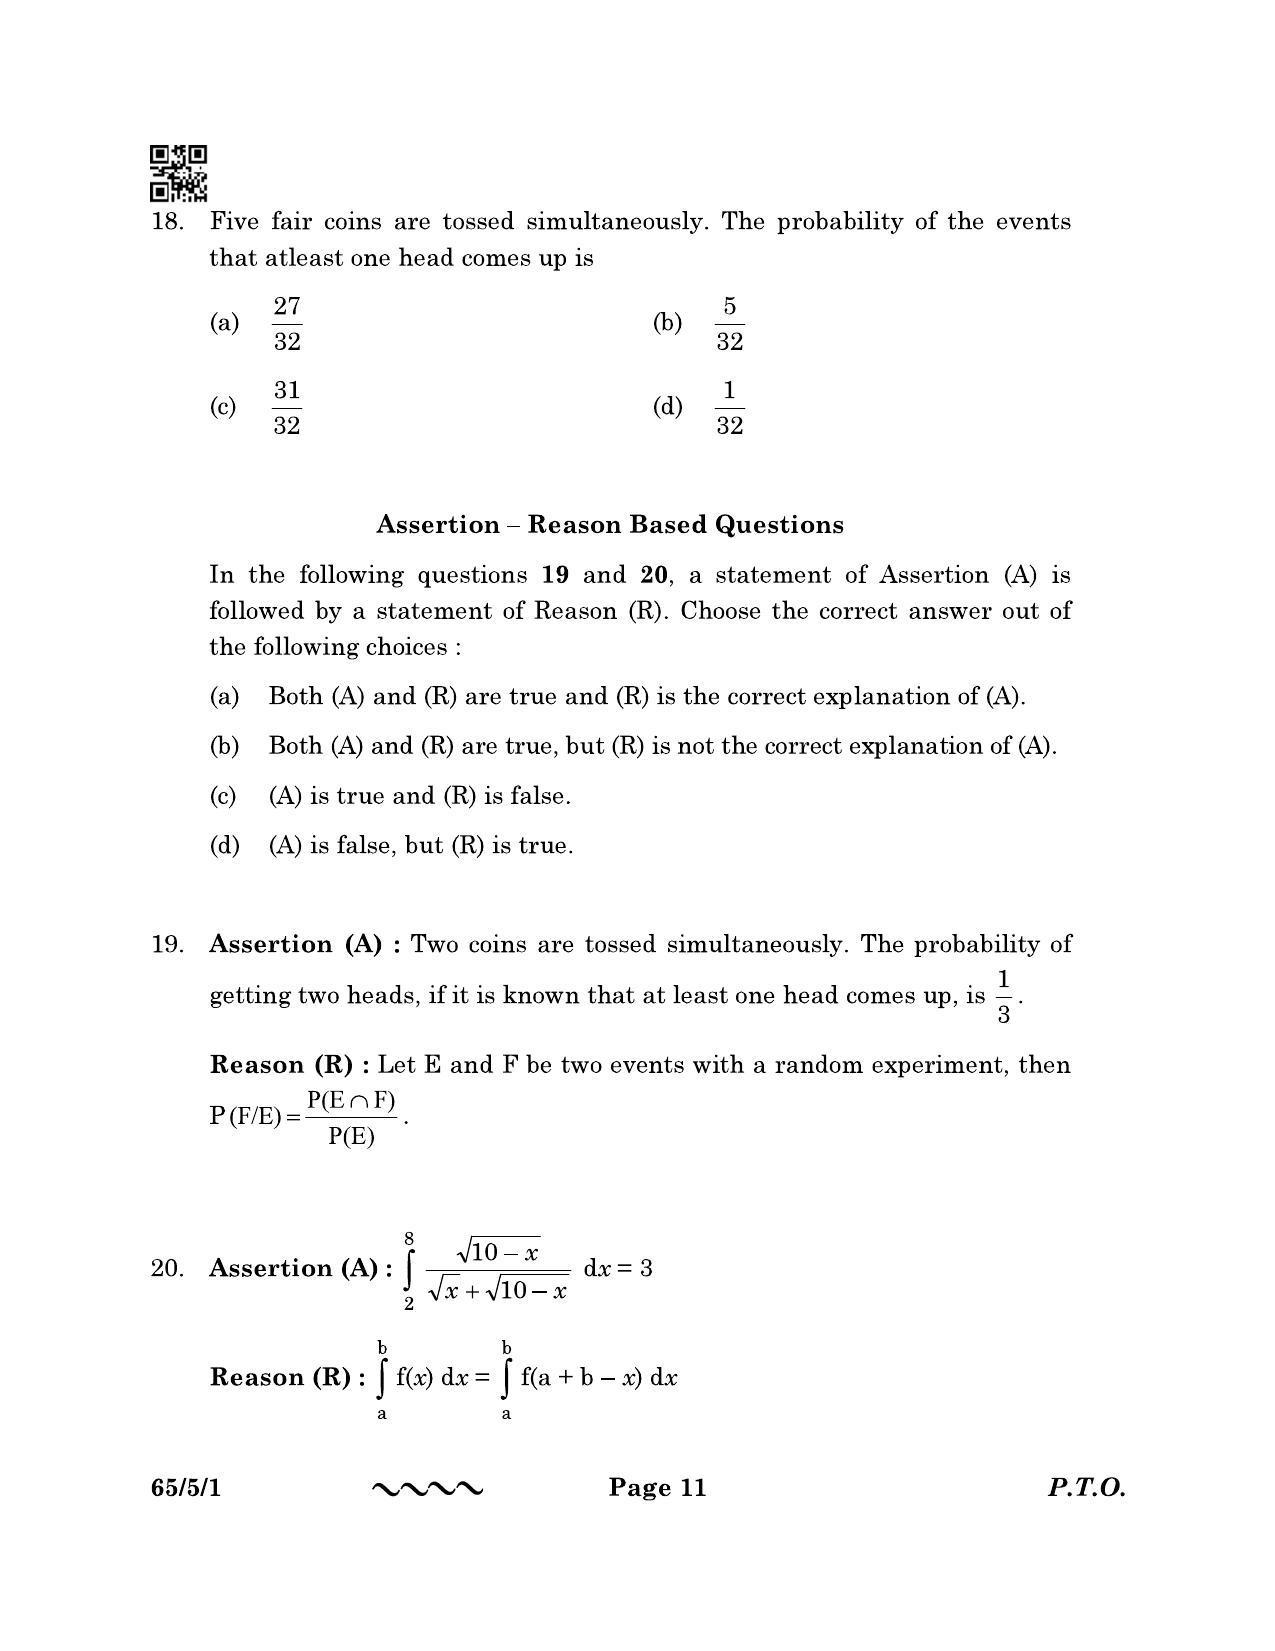 CBSE Class 12 65-5-1 MATHEMATICS 2023 Question Paper - Page 11